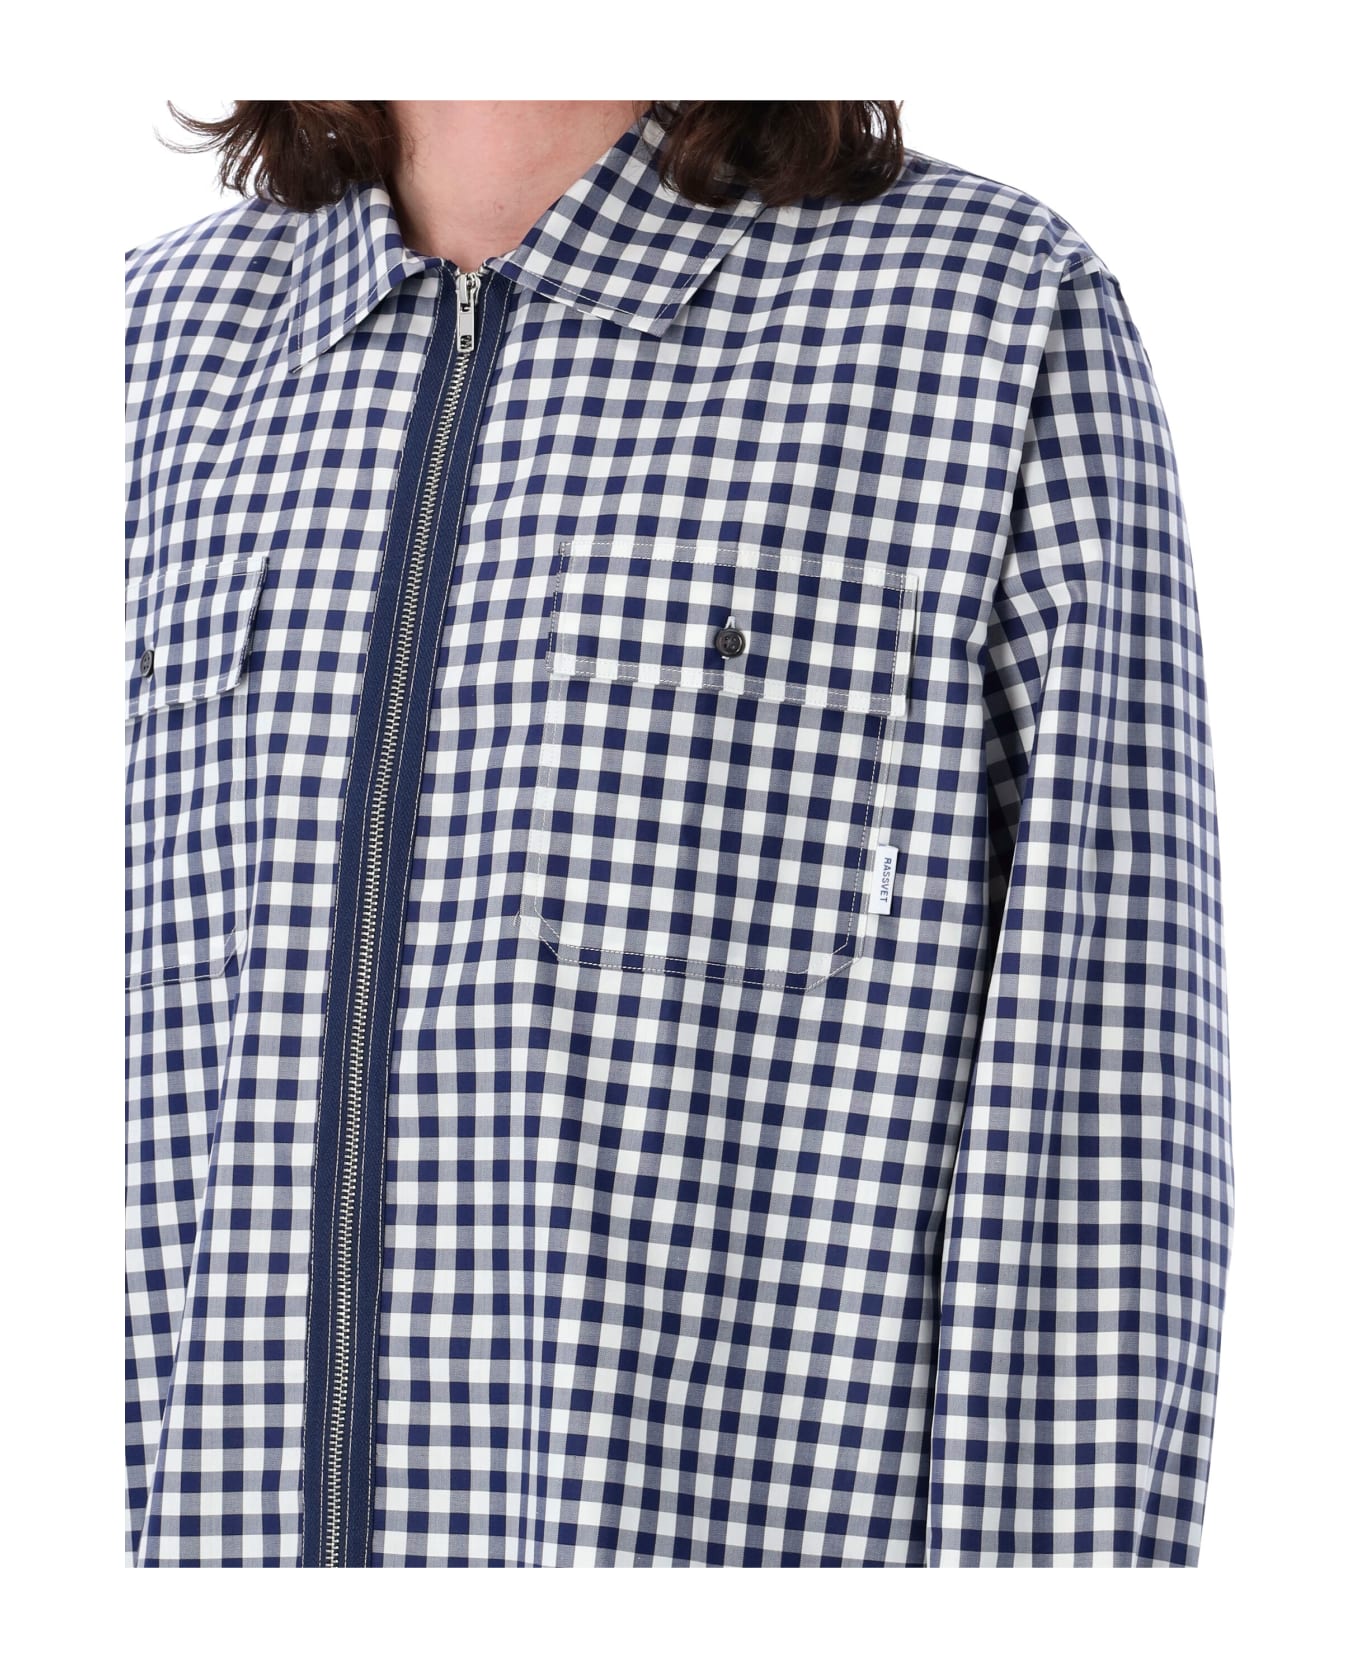 PACCBET Gingham Check Shirt - WHITE BLUE CHECK シャツ